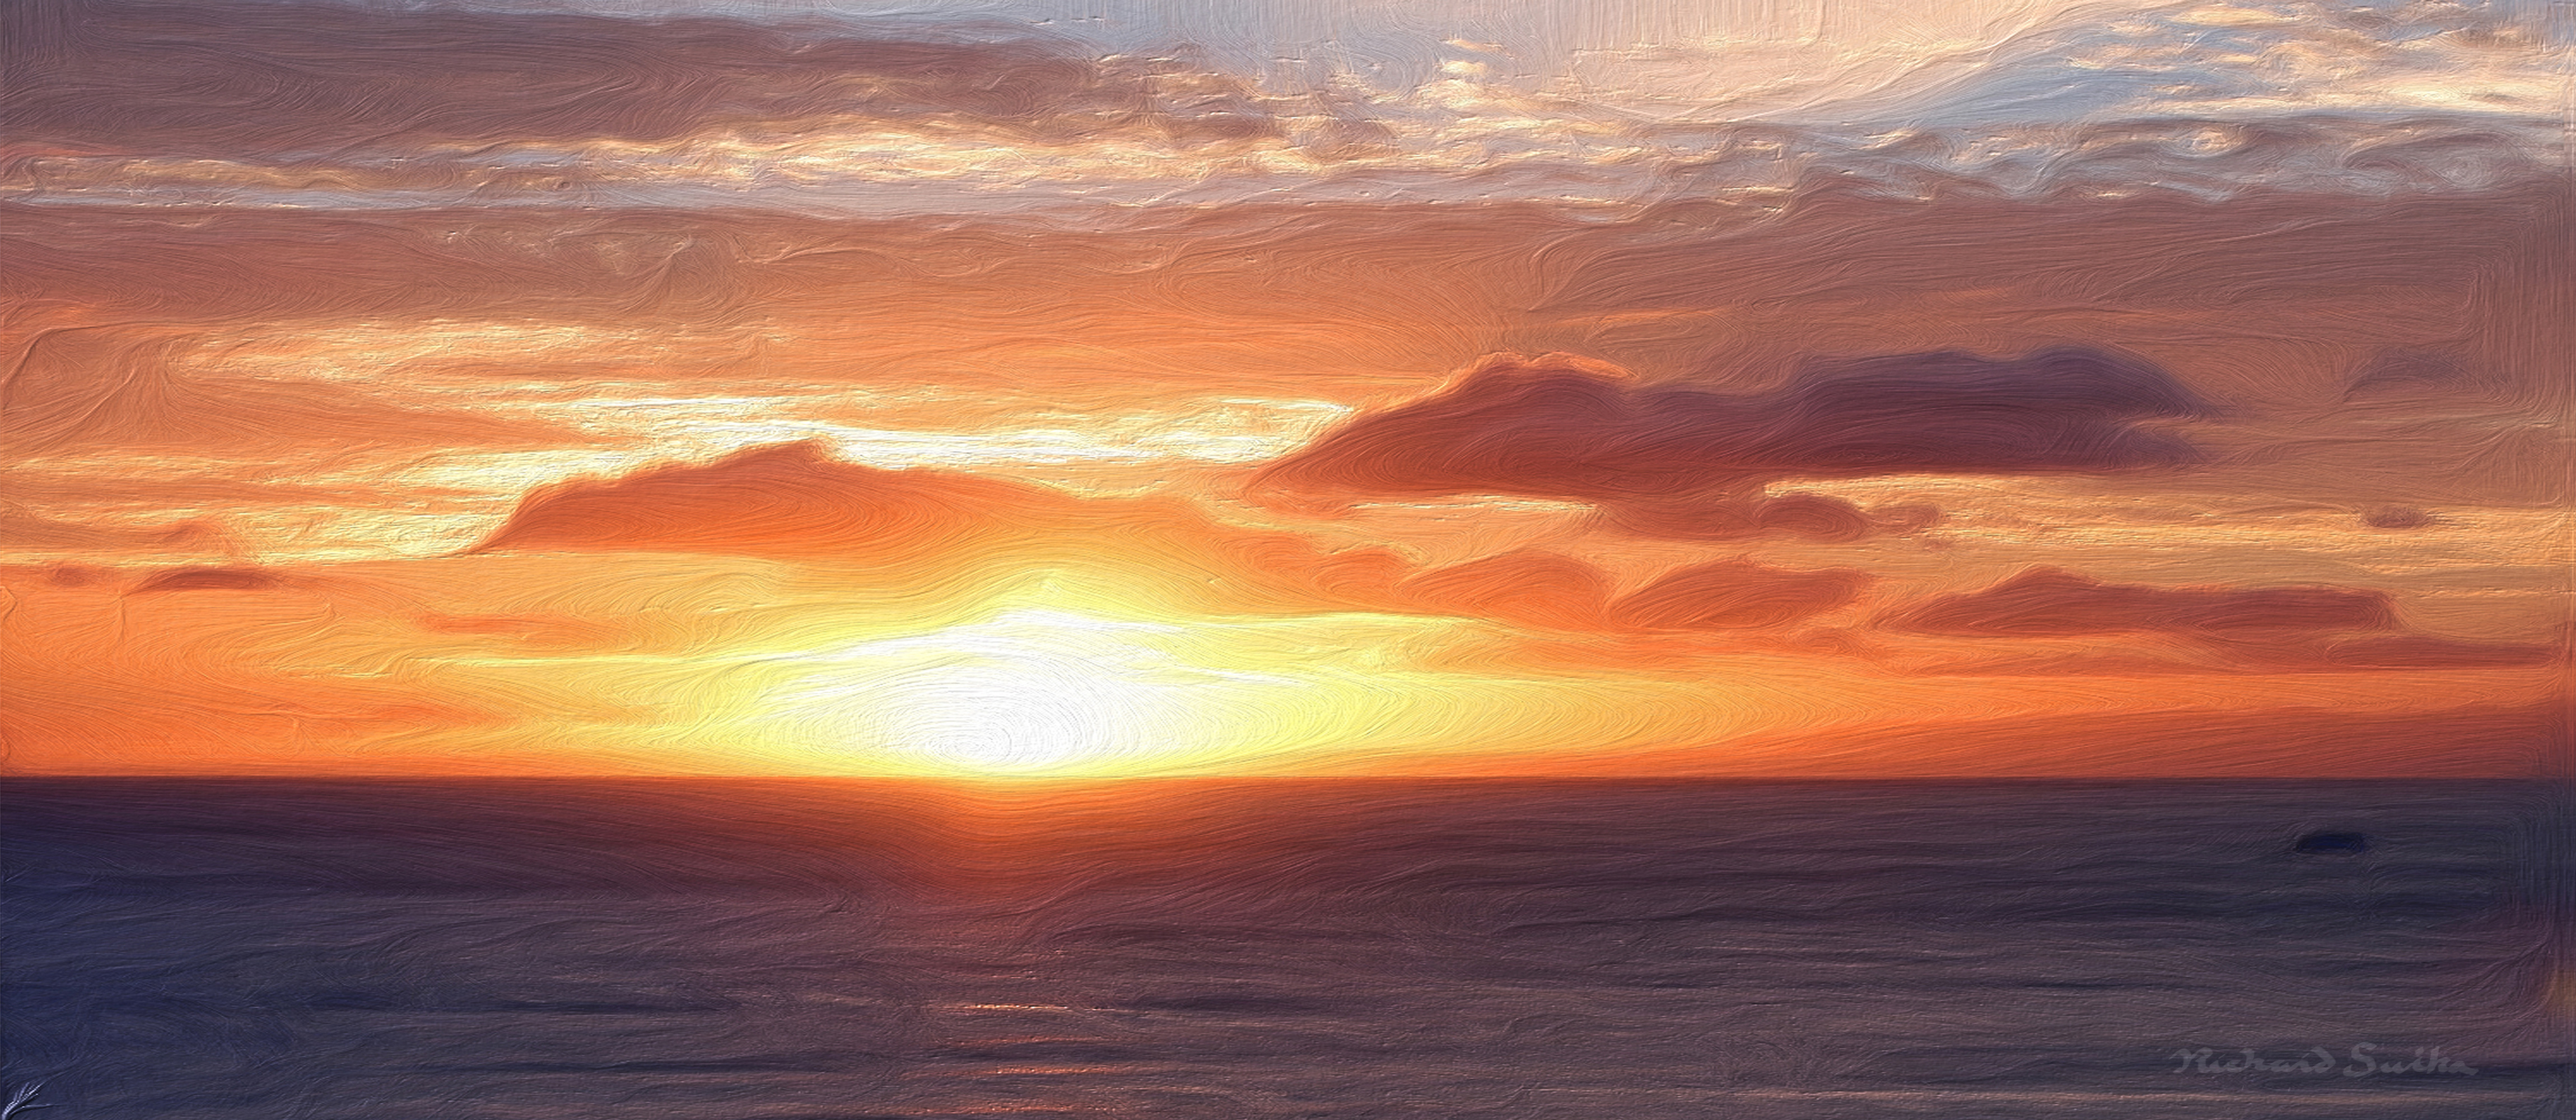 Hazy Ocean Sunset 4600x2000 by ricswika on DeviantArt